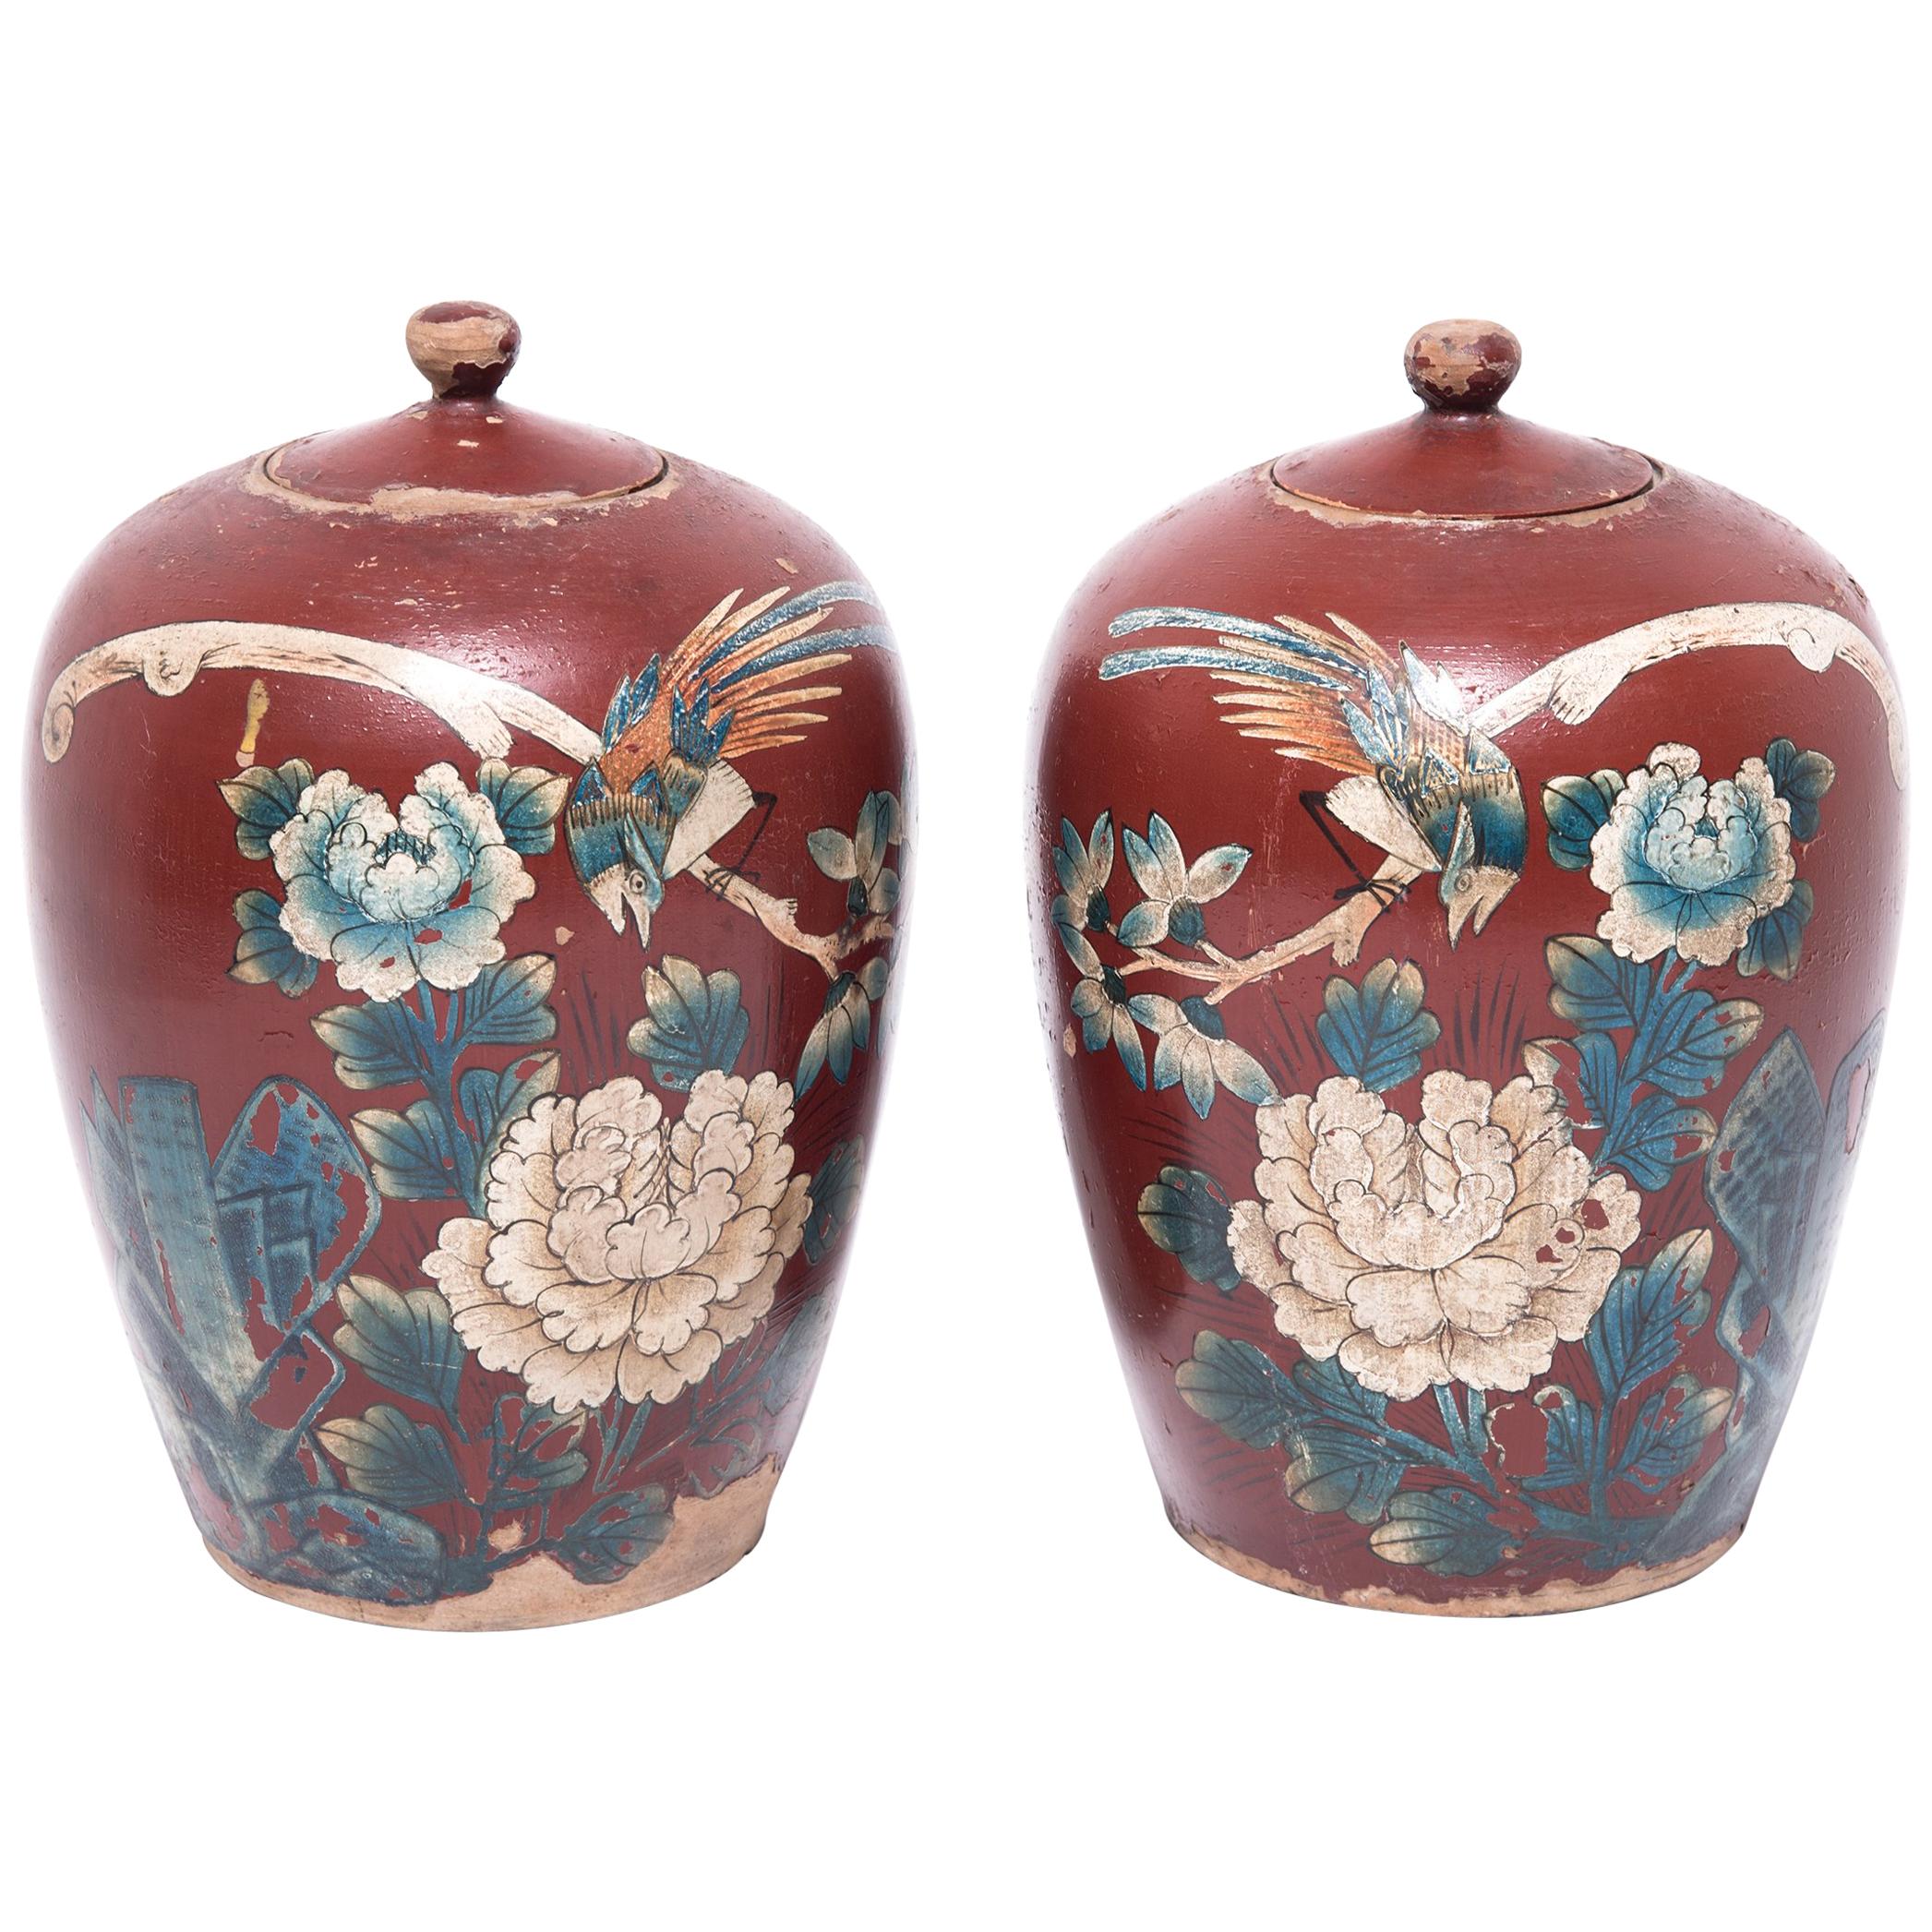 Pair of Chinese Painted Oxblood Jars with Phoenix & Peonies